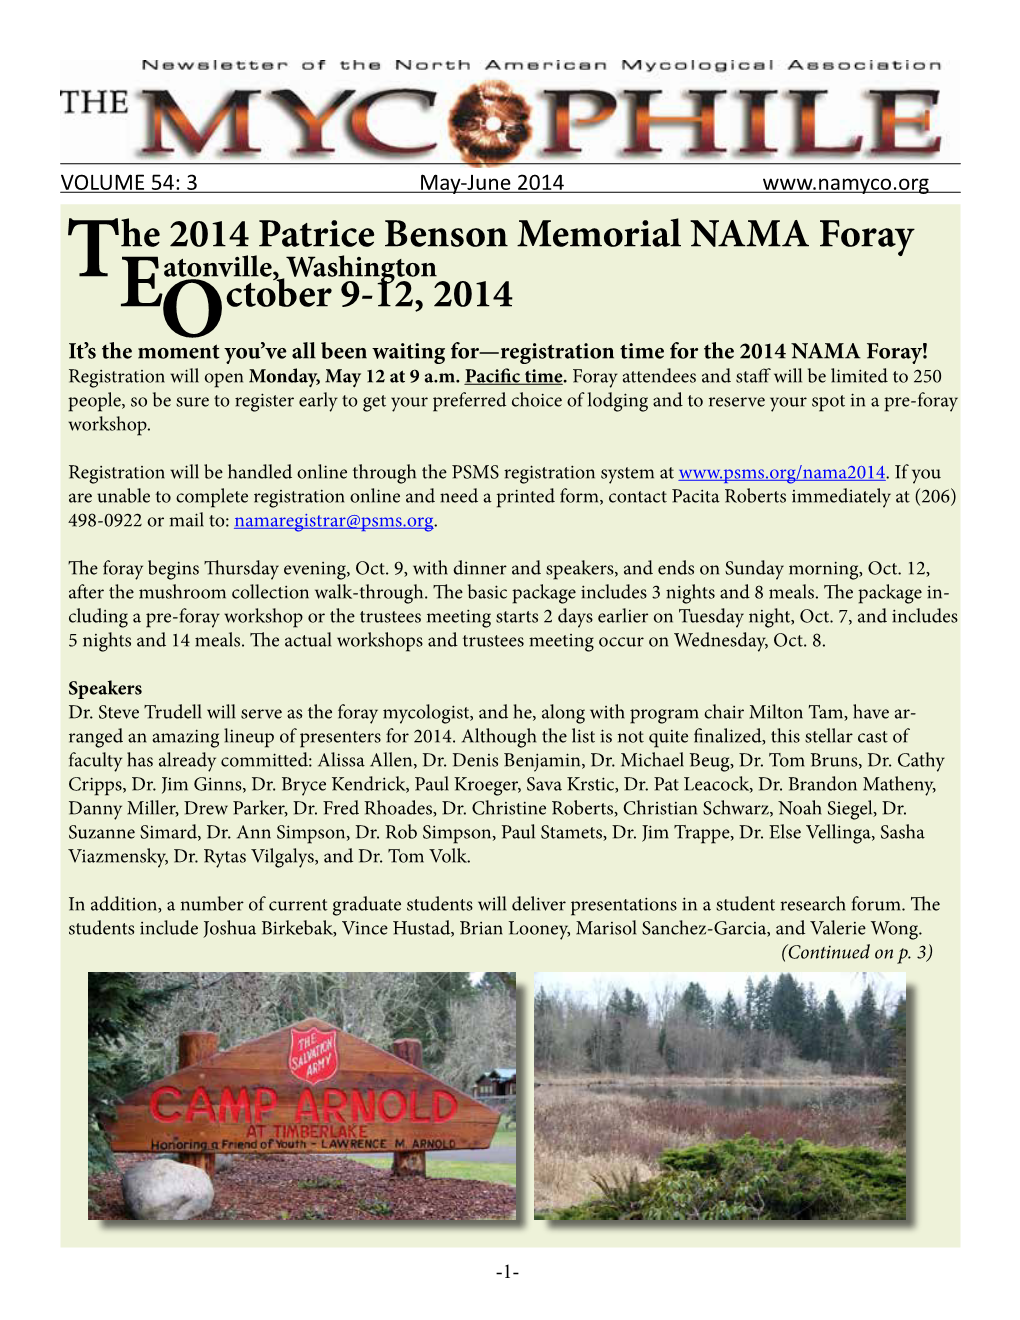 The 2014 Patrice Benson Memorial NAMA Foray October 9-12, 2014